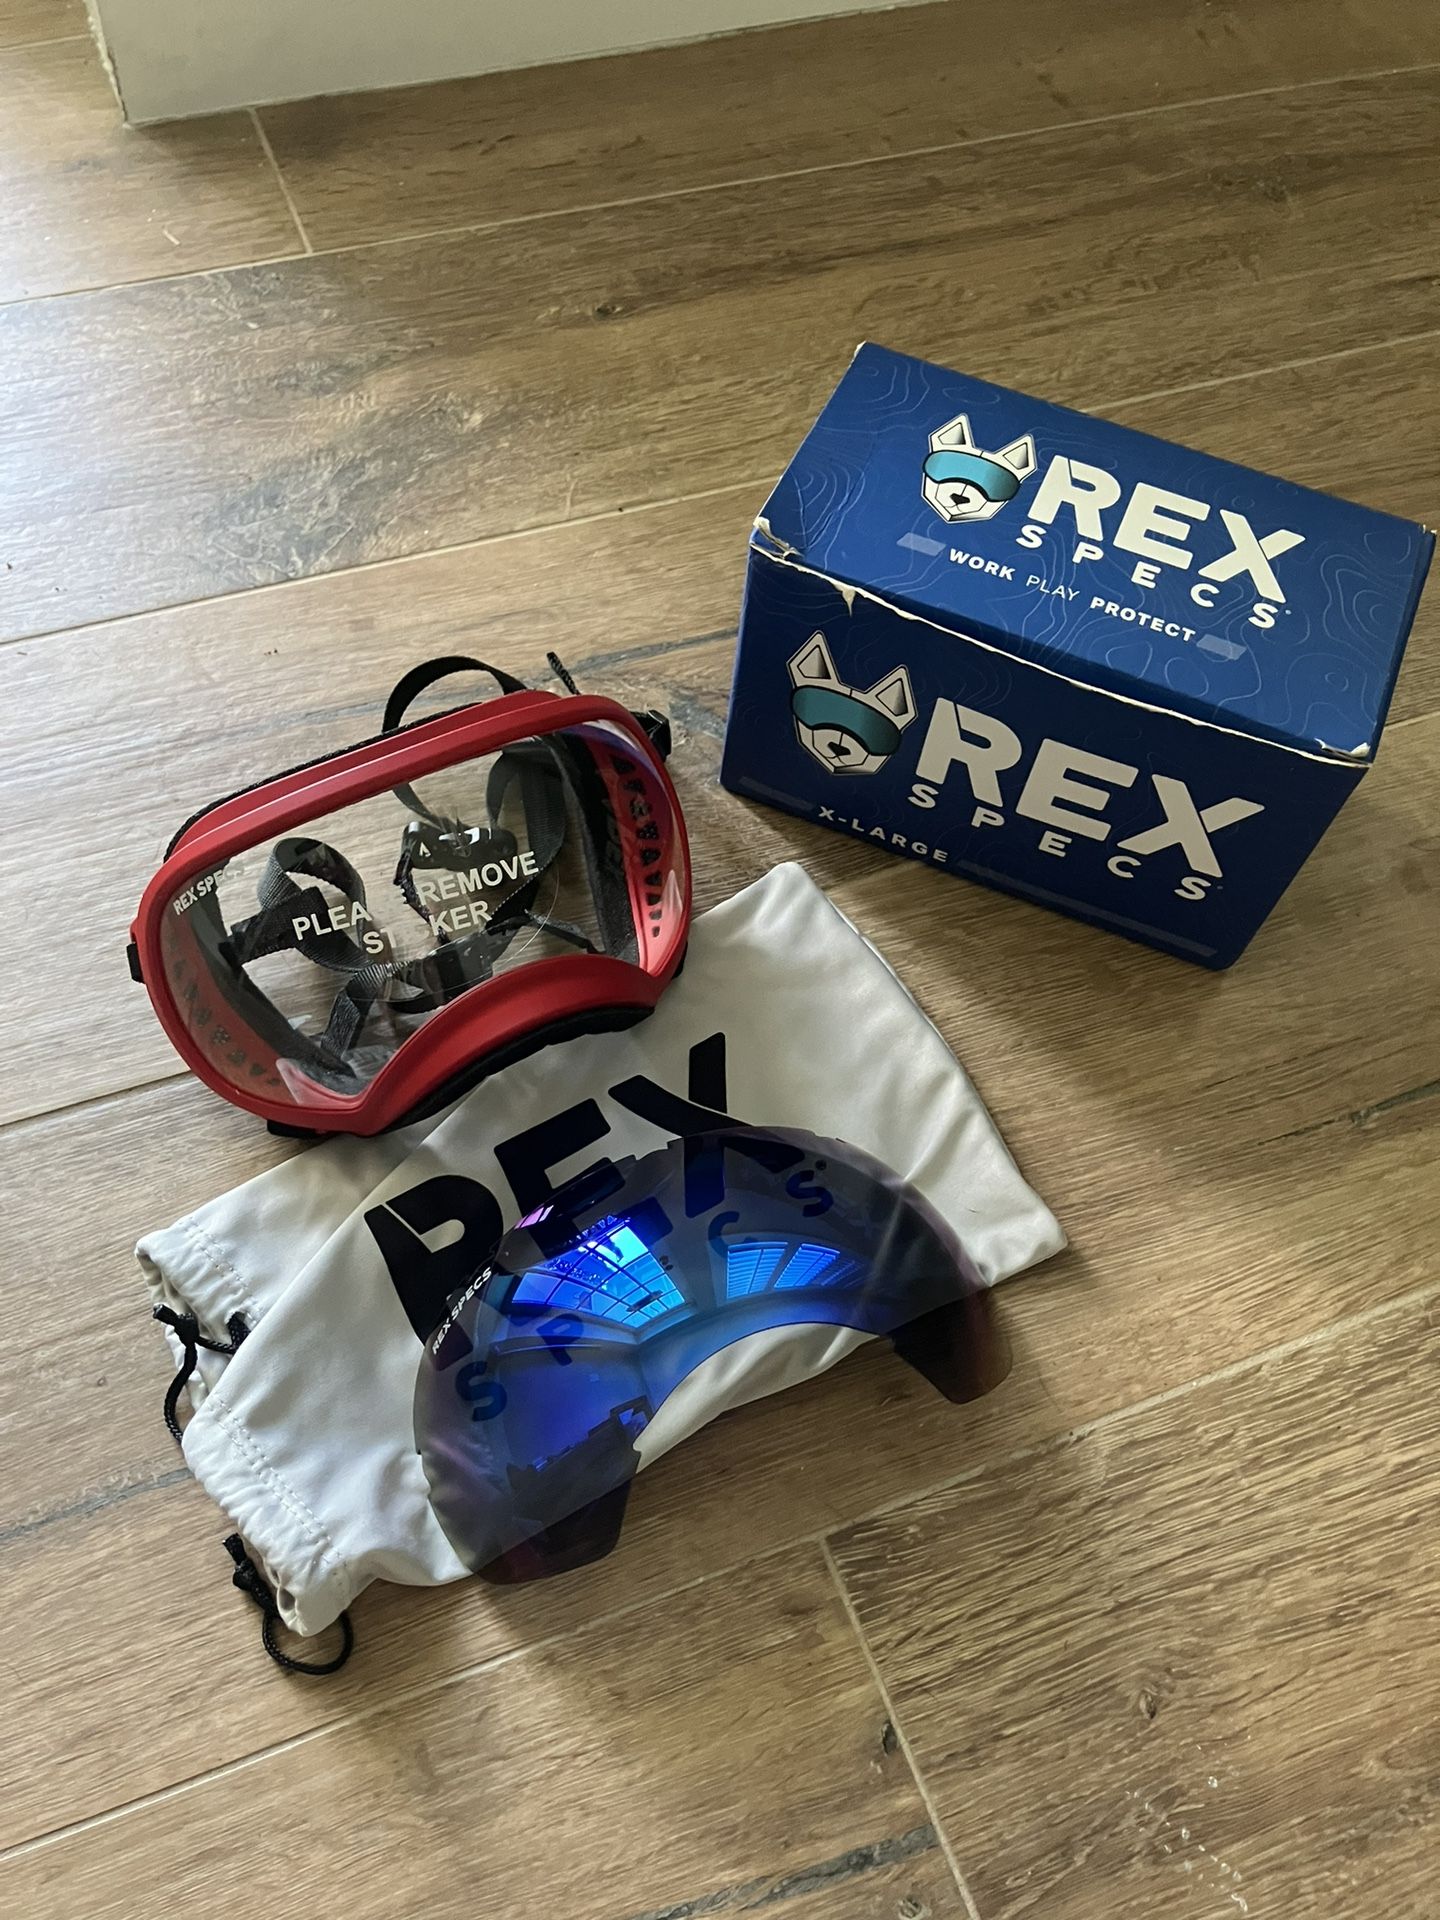 Rex Specs Brand New!